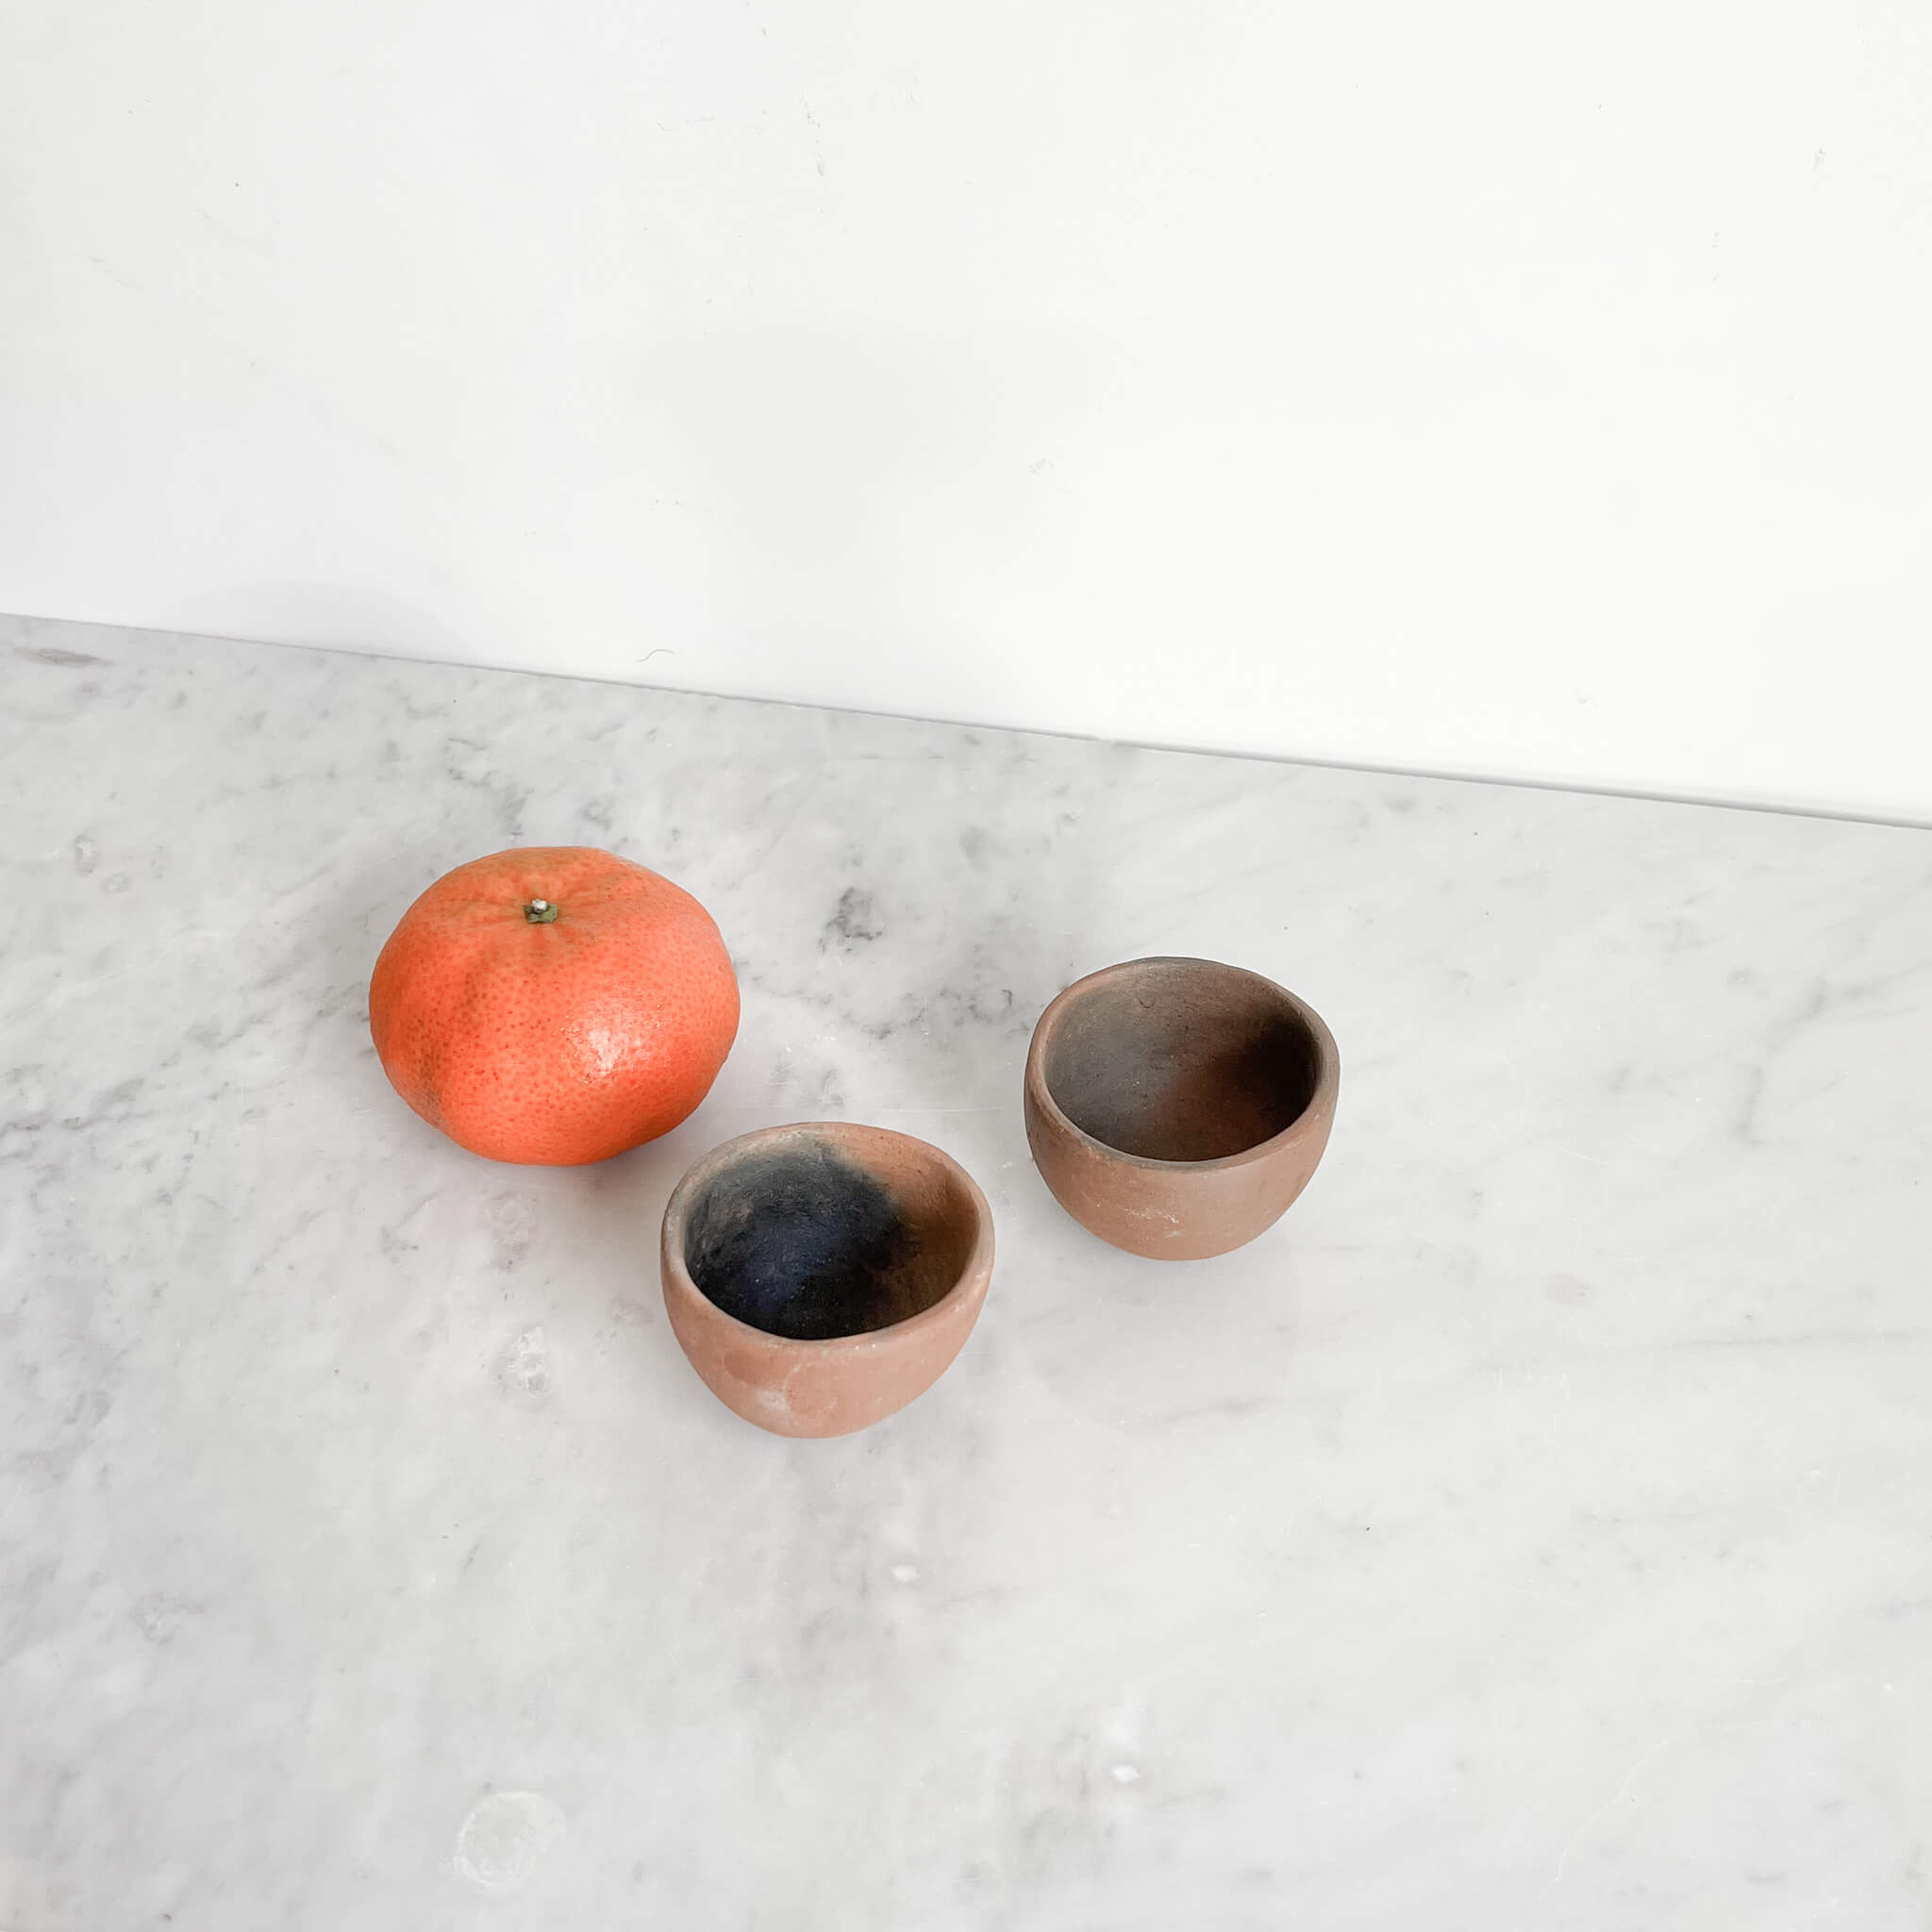 A set of 2 clay mezcal copita cups next to a small orange.